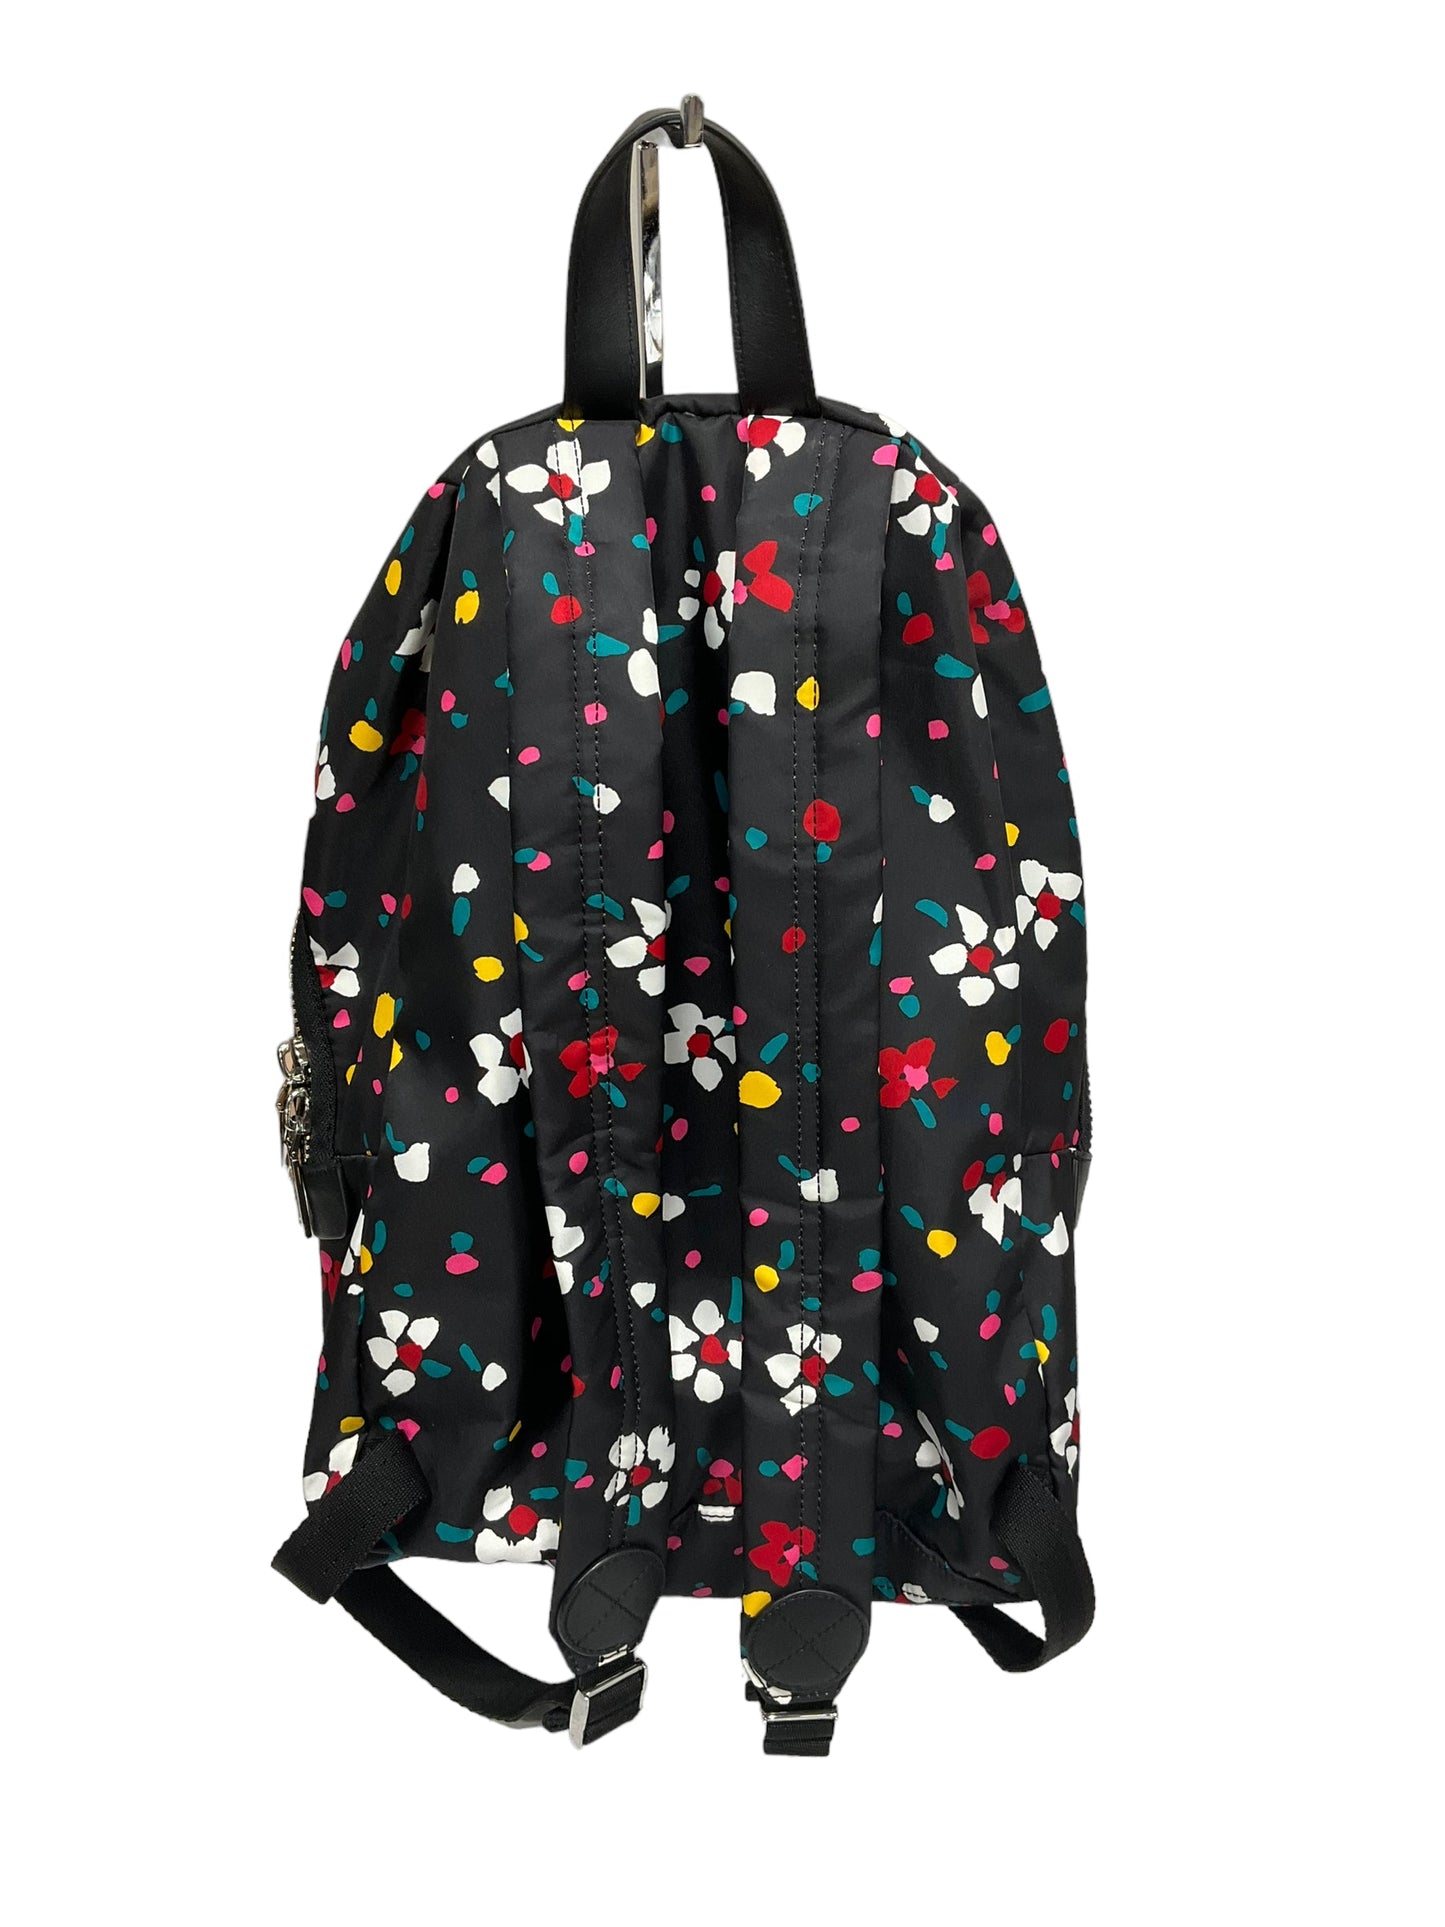 Backpack Designer By Marc Jacobs  Size: Large